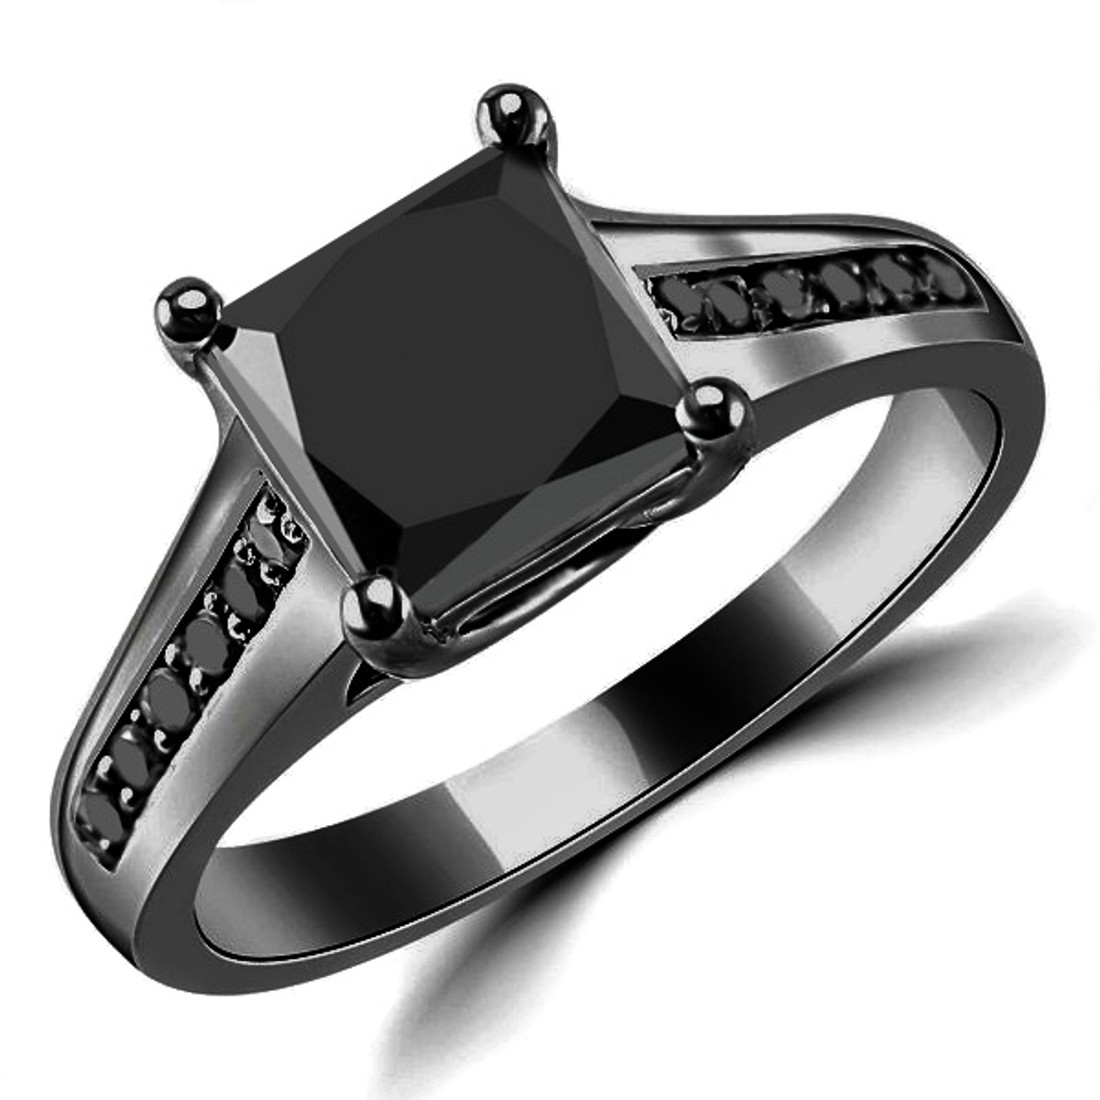 5 Reasons to Buy a Black Diamond Ring